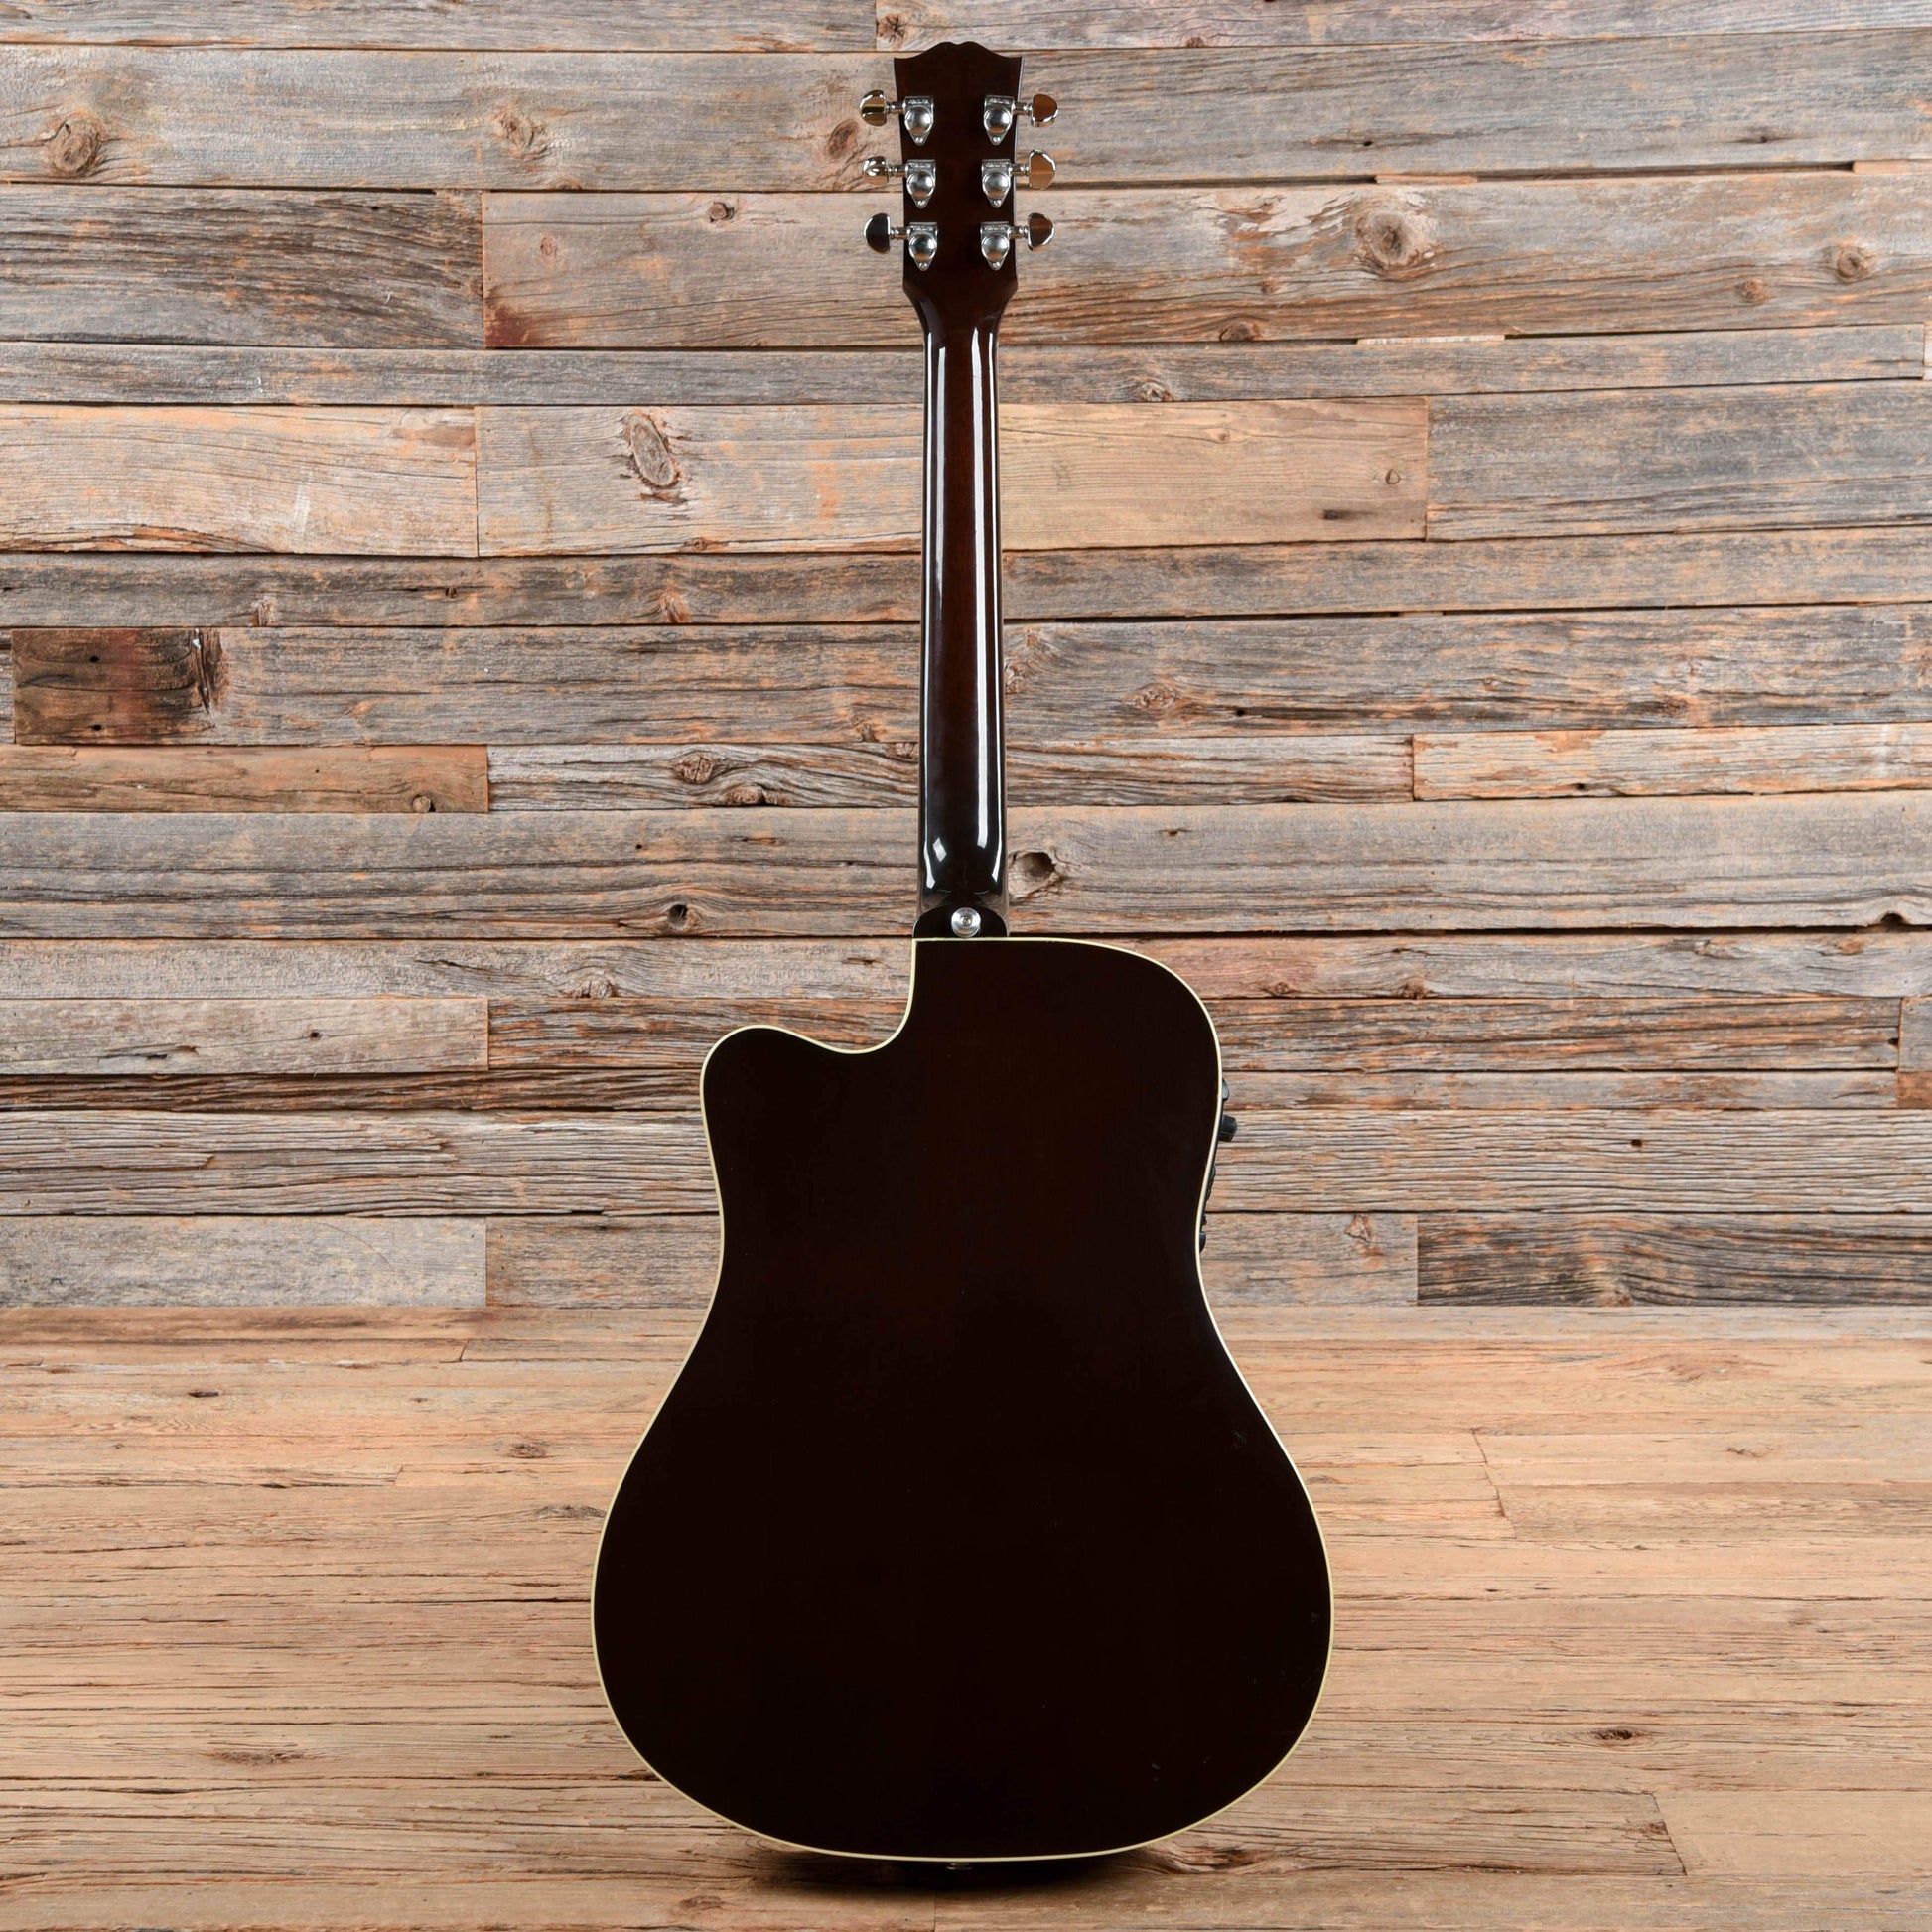 Gibson Montana Hummingbird Pro Sunburst 2009 Acoustic Guitars / Dreadnought